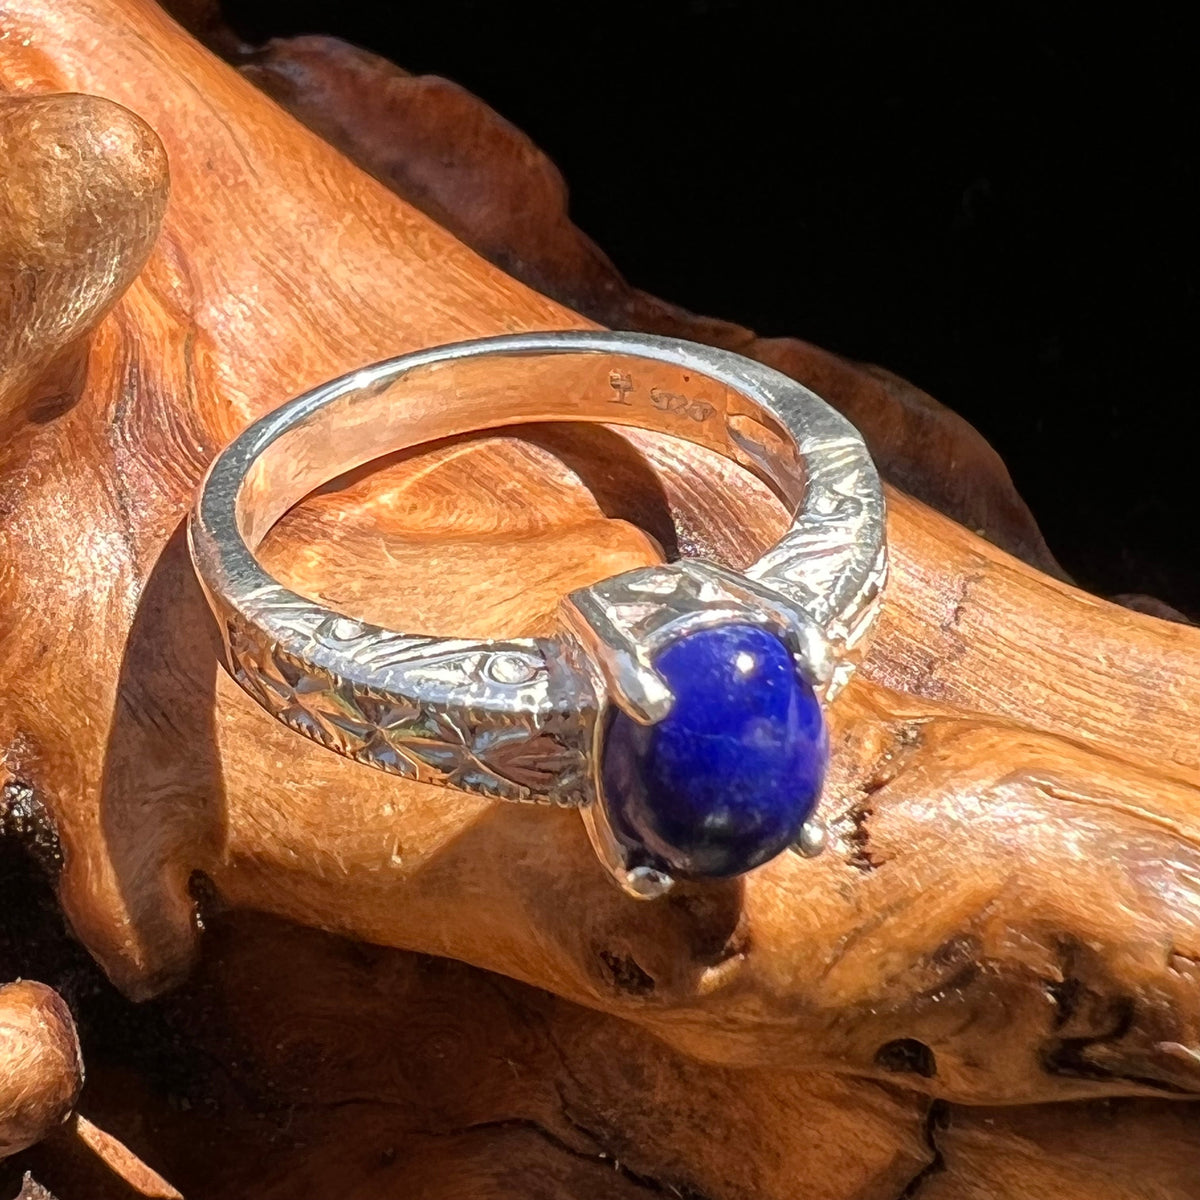 Lapis Lazuli Ring Sterling Silver Size 7.25 #2860-Moldavite Life